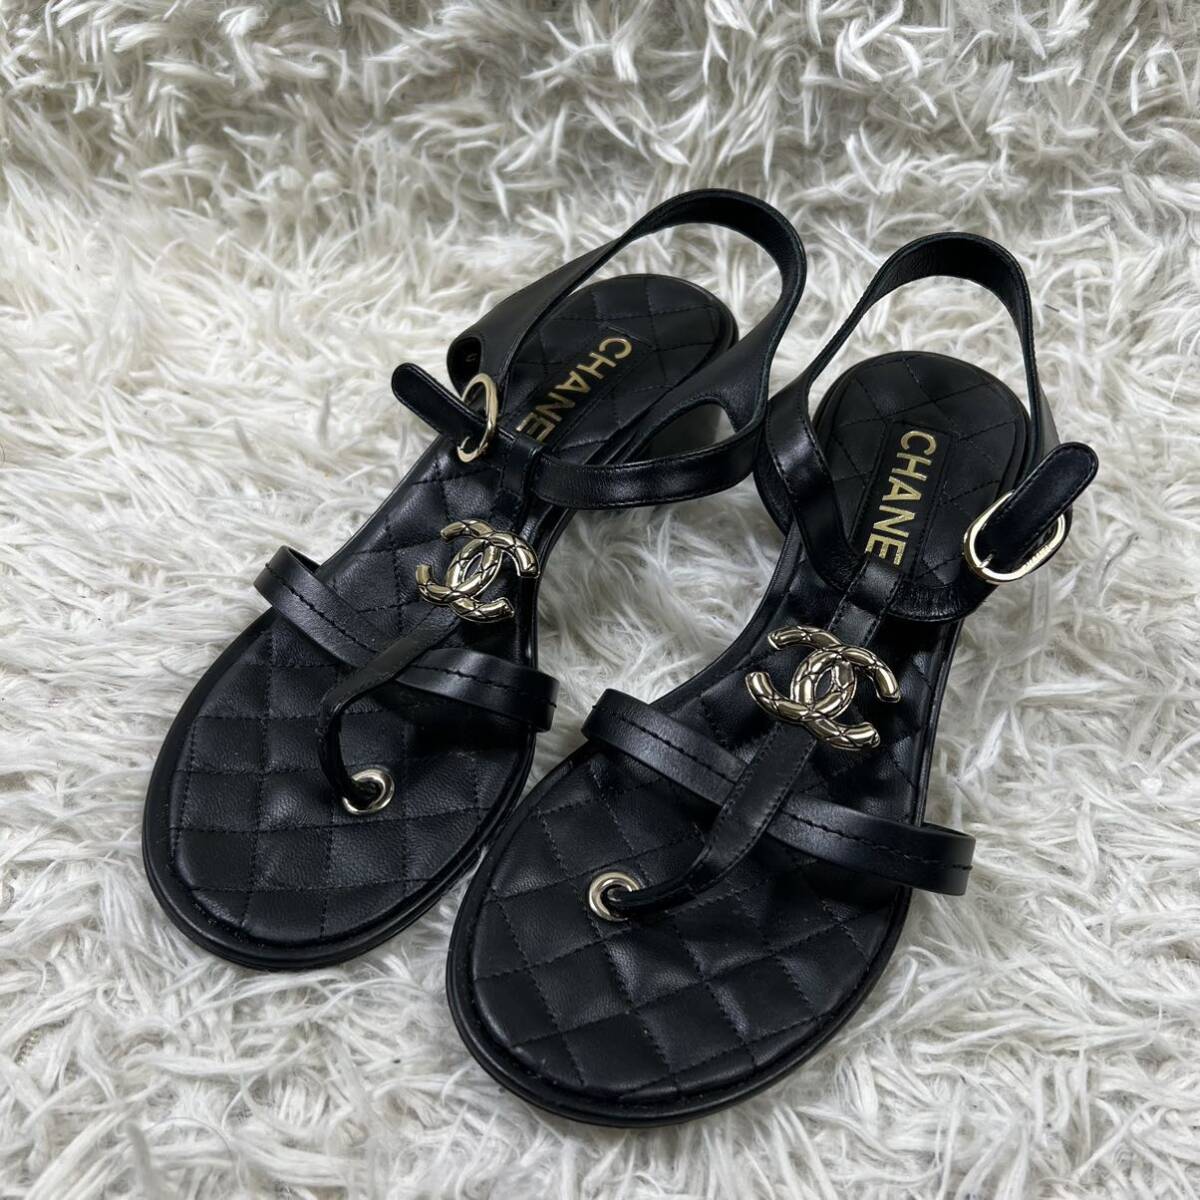  regular price 23 ten thousand jpy 1 jpy start!!CHANEL Chanel matelasse sandals strap sandals here Mark black 